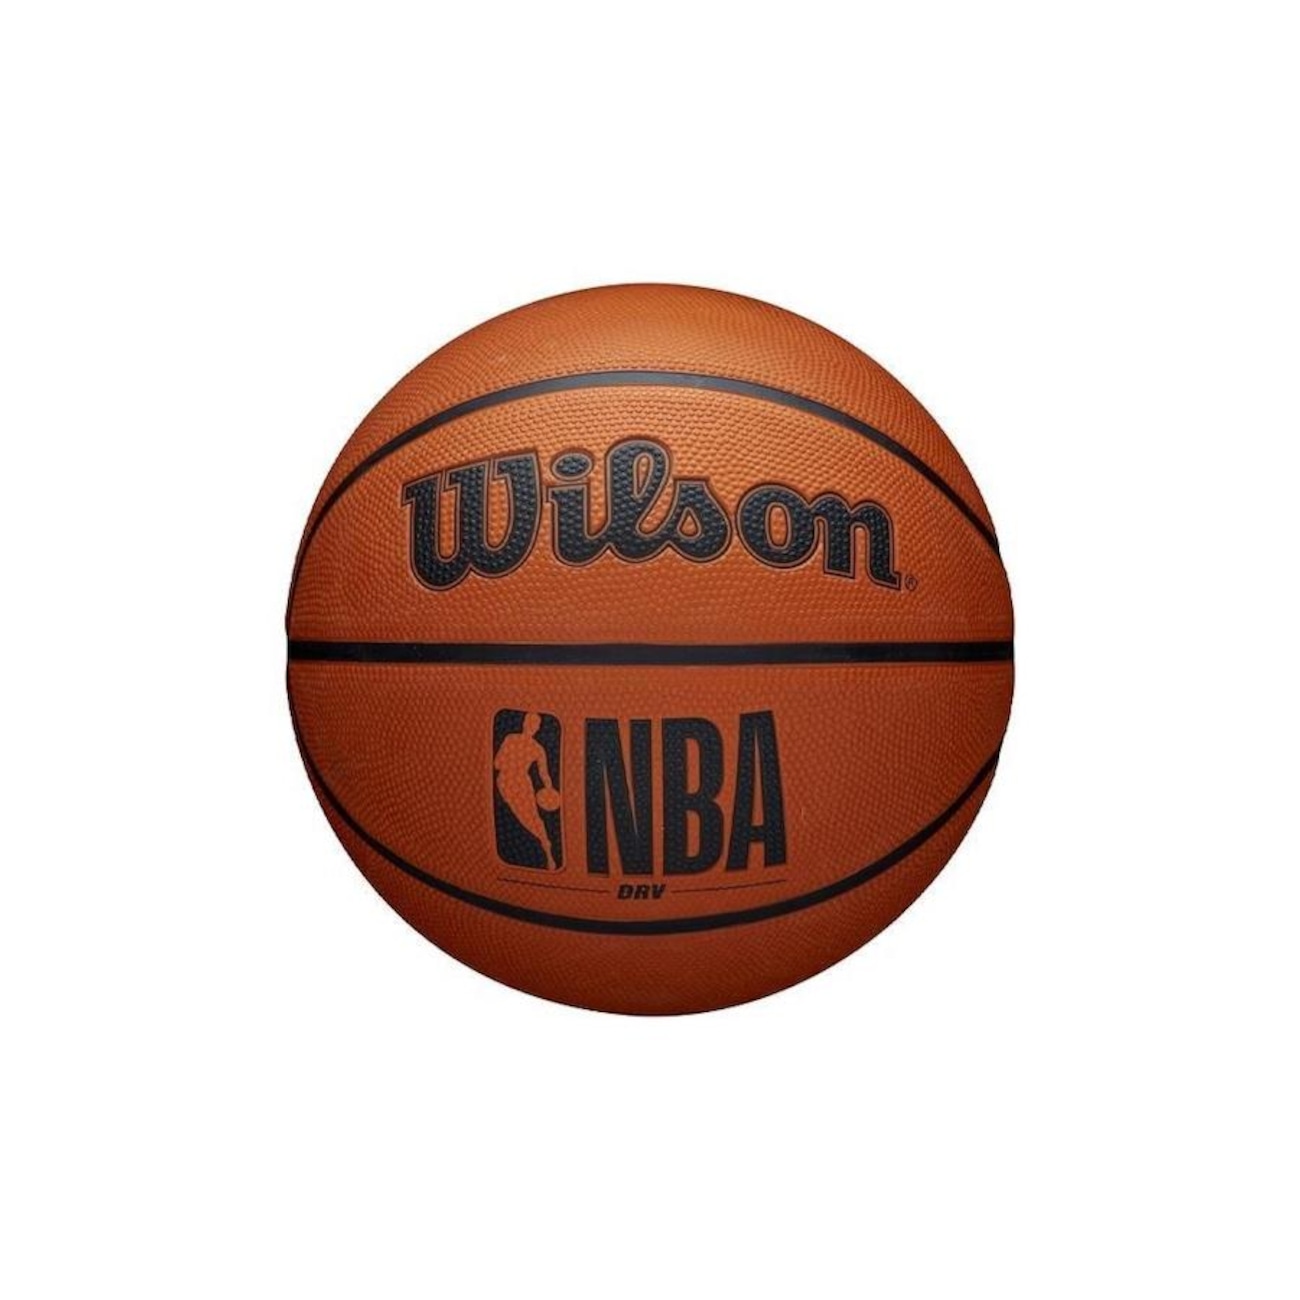 Bola de Basquete NBA DRV Pro #6 - Wilson · Woder